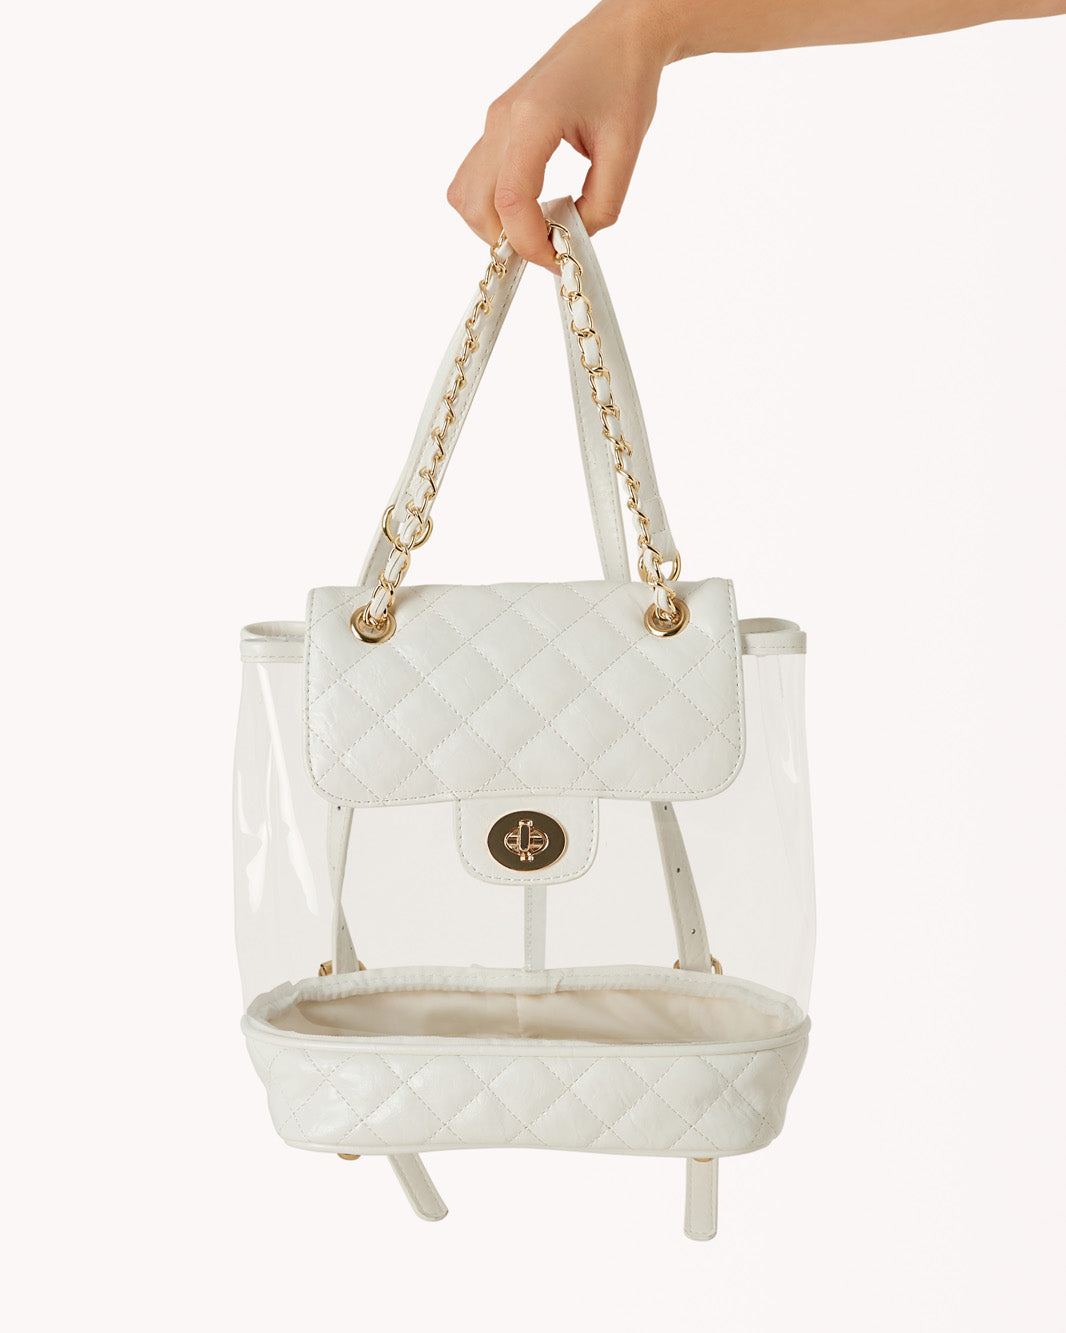 CASSIE BACKPACK - WHITE-CLEAR-Handbags-Billini-O/S-BILLINI USA